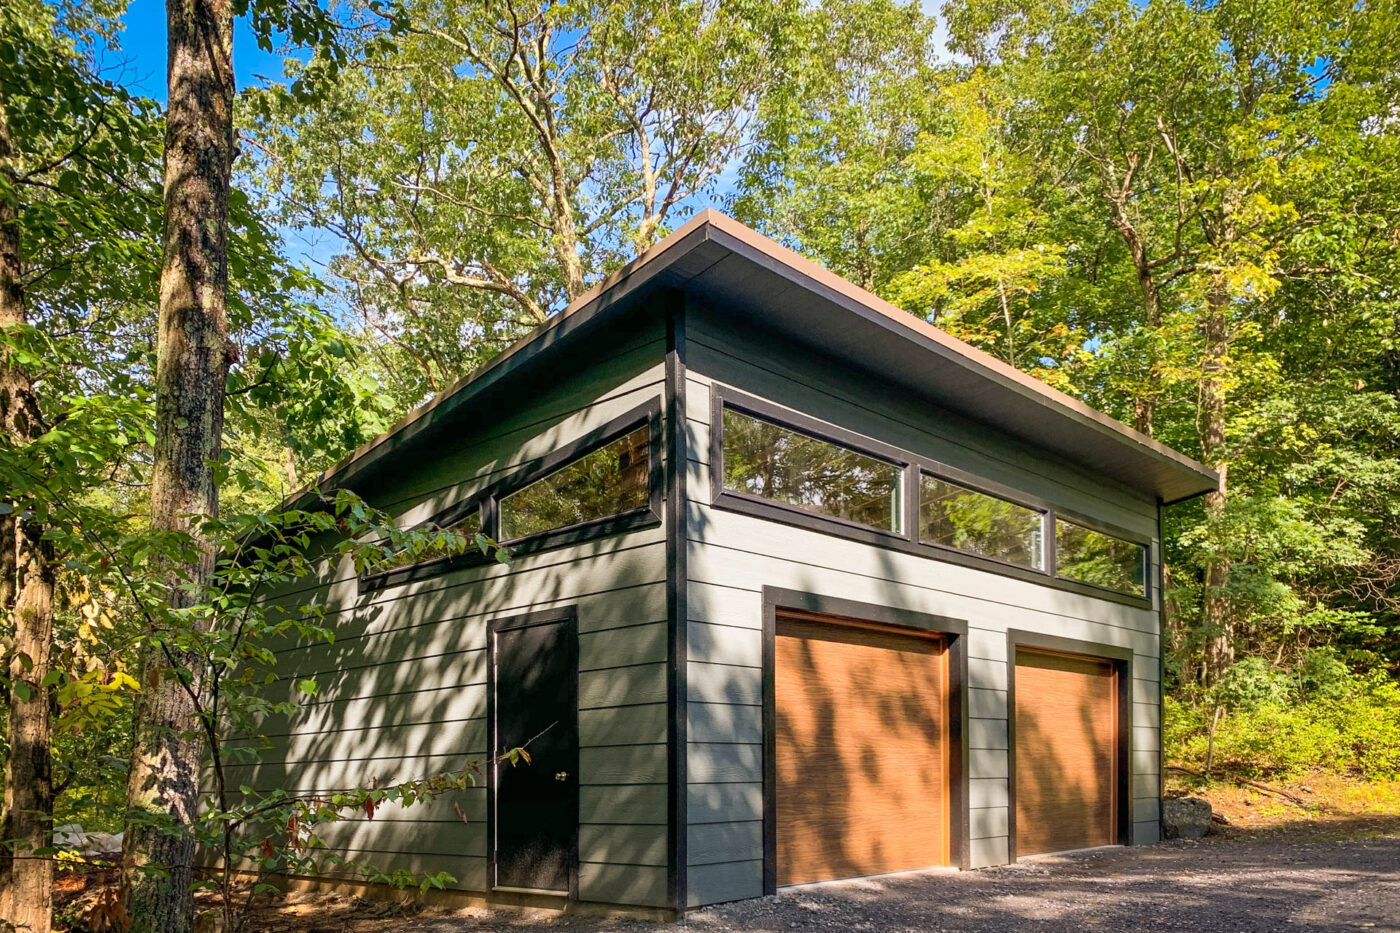 slanted roof 2-car garage for sale in Lakewood Township, NJ